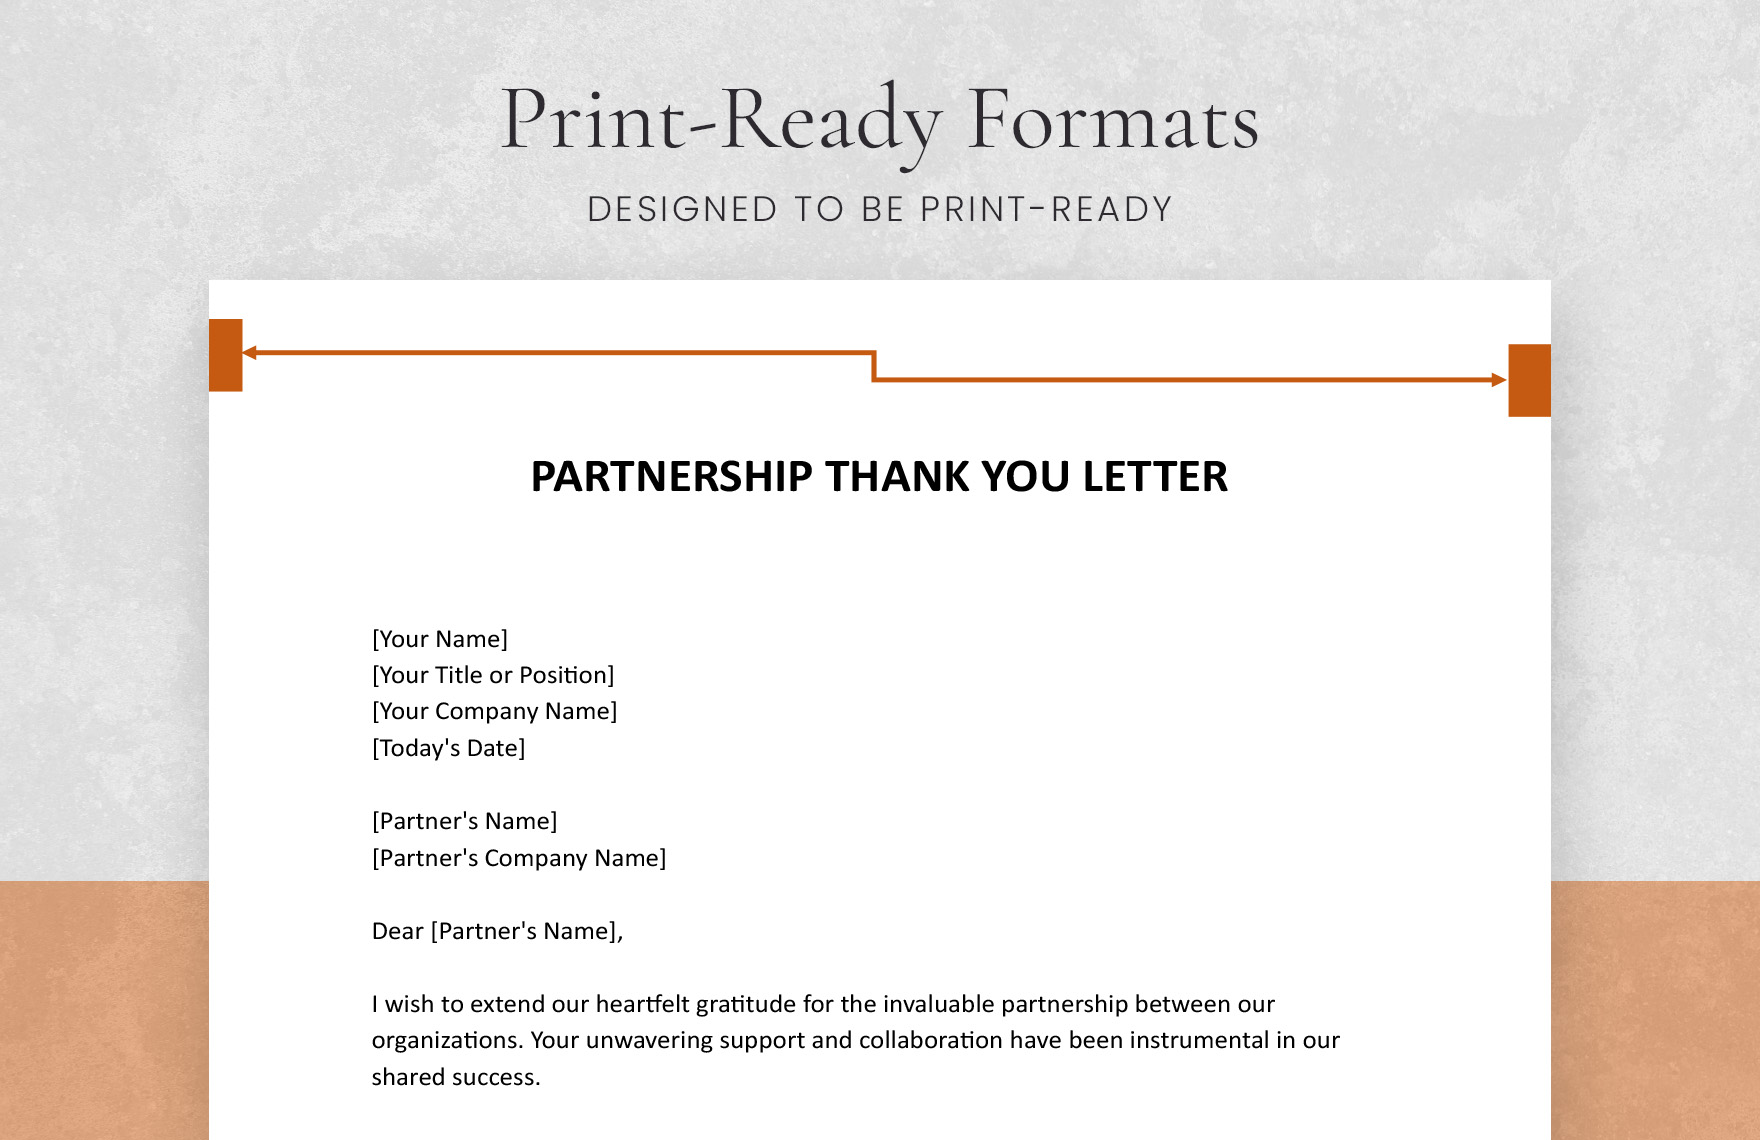 Partnership Thank You Letter